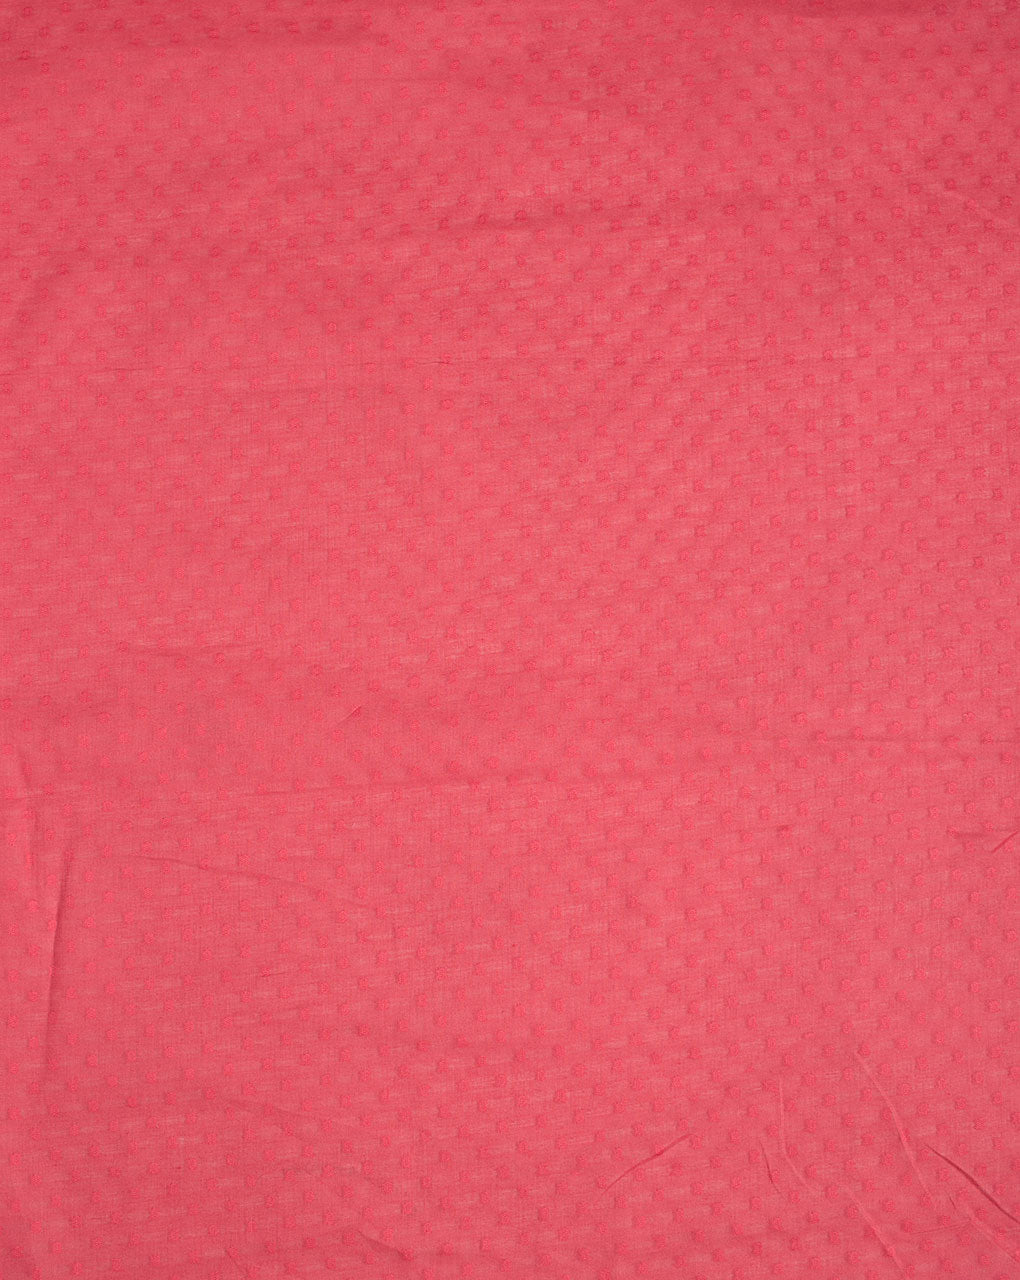 Red Jacquard Cotton Fabric